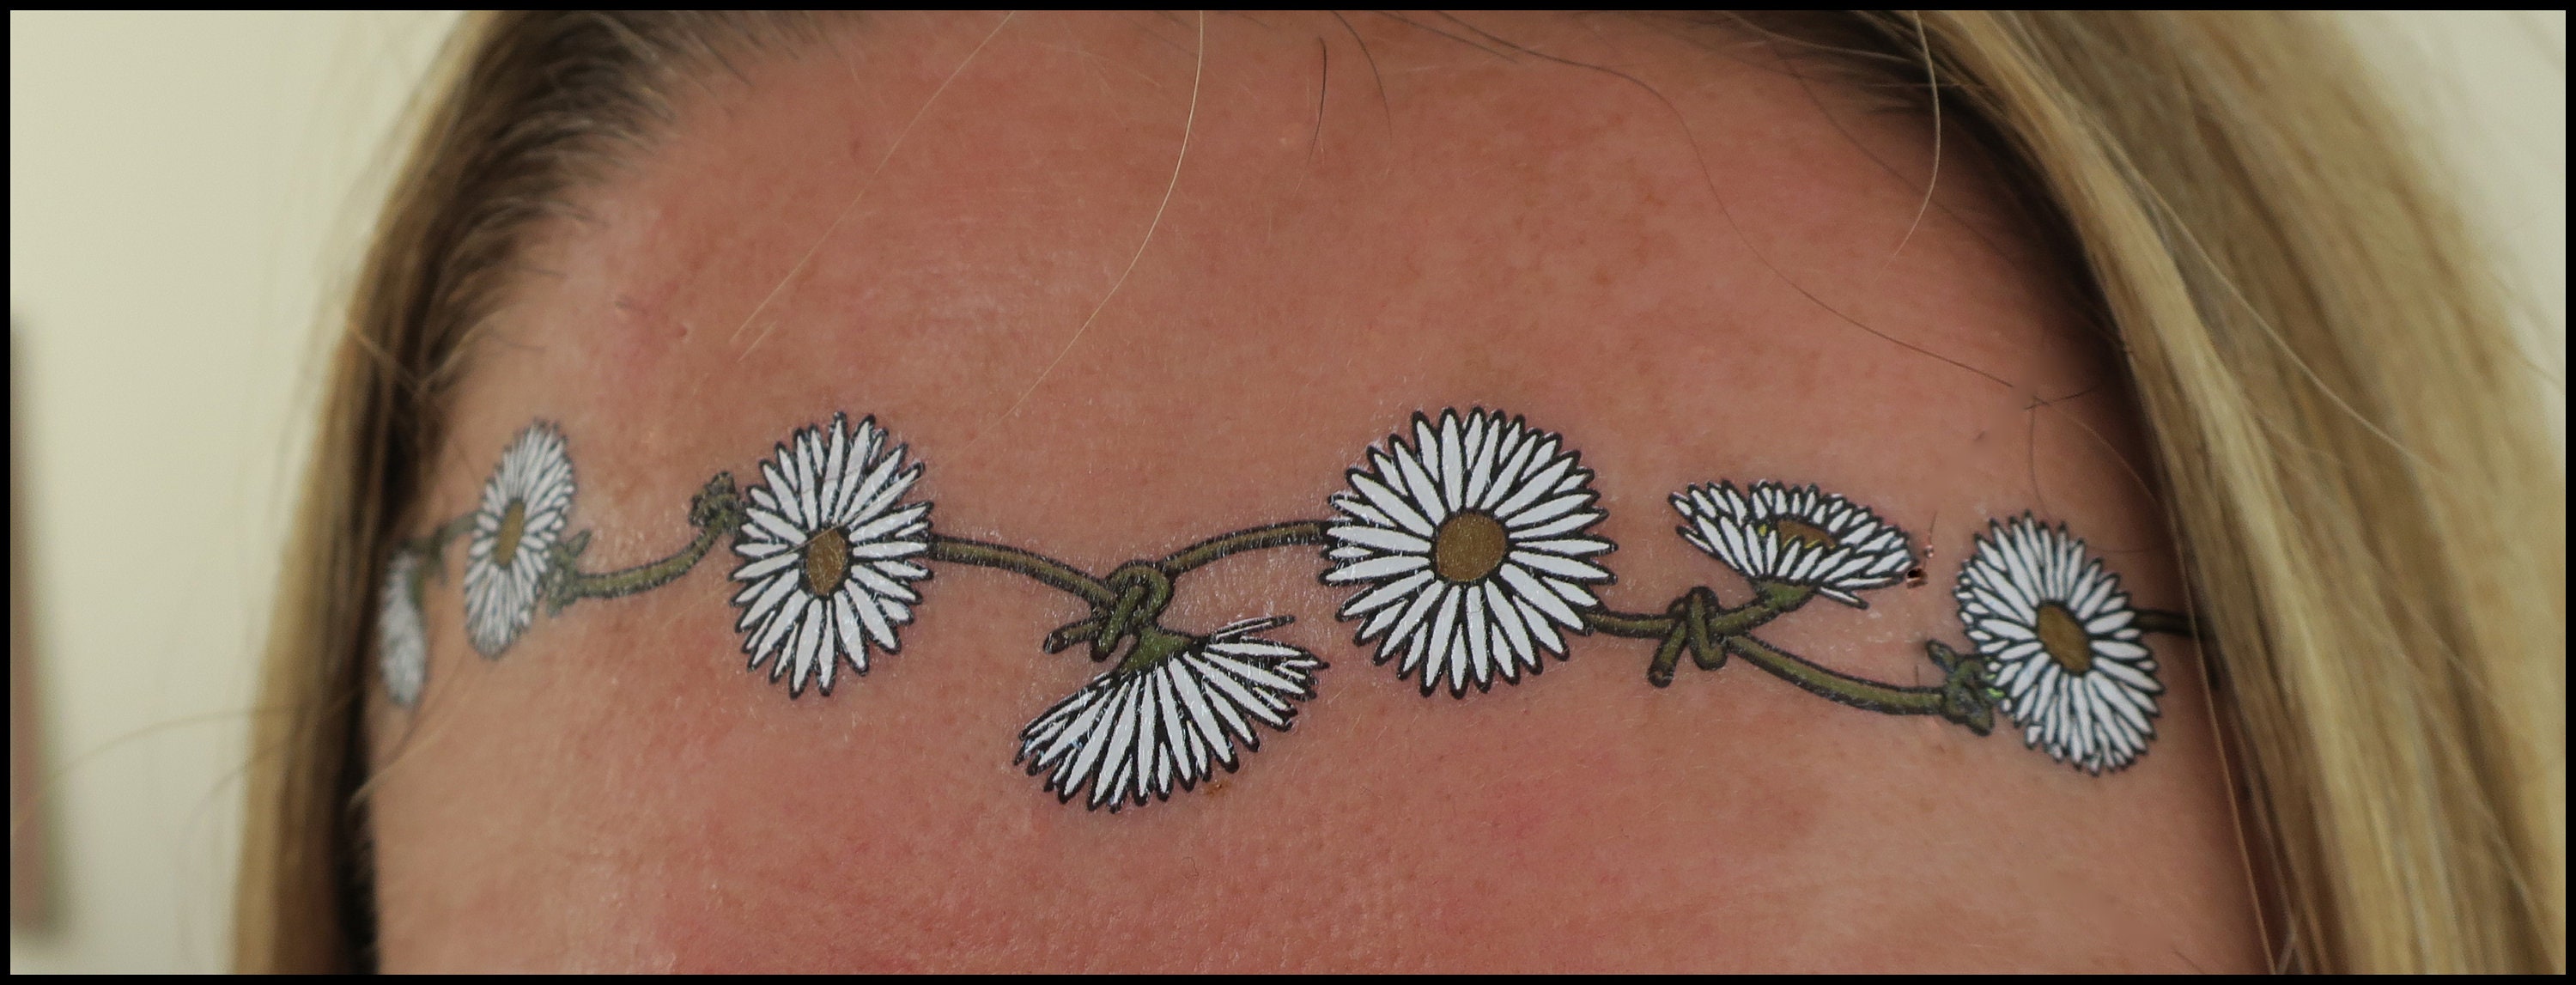 Funky Festival Flower Temporary Tattoos Pretty Daisy Chain